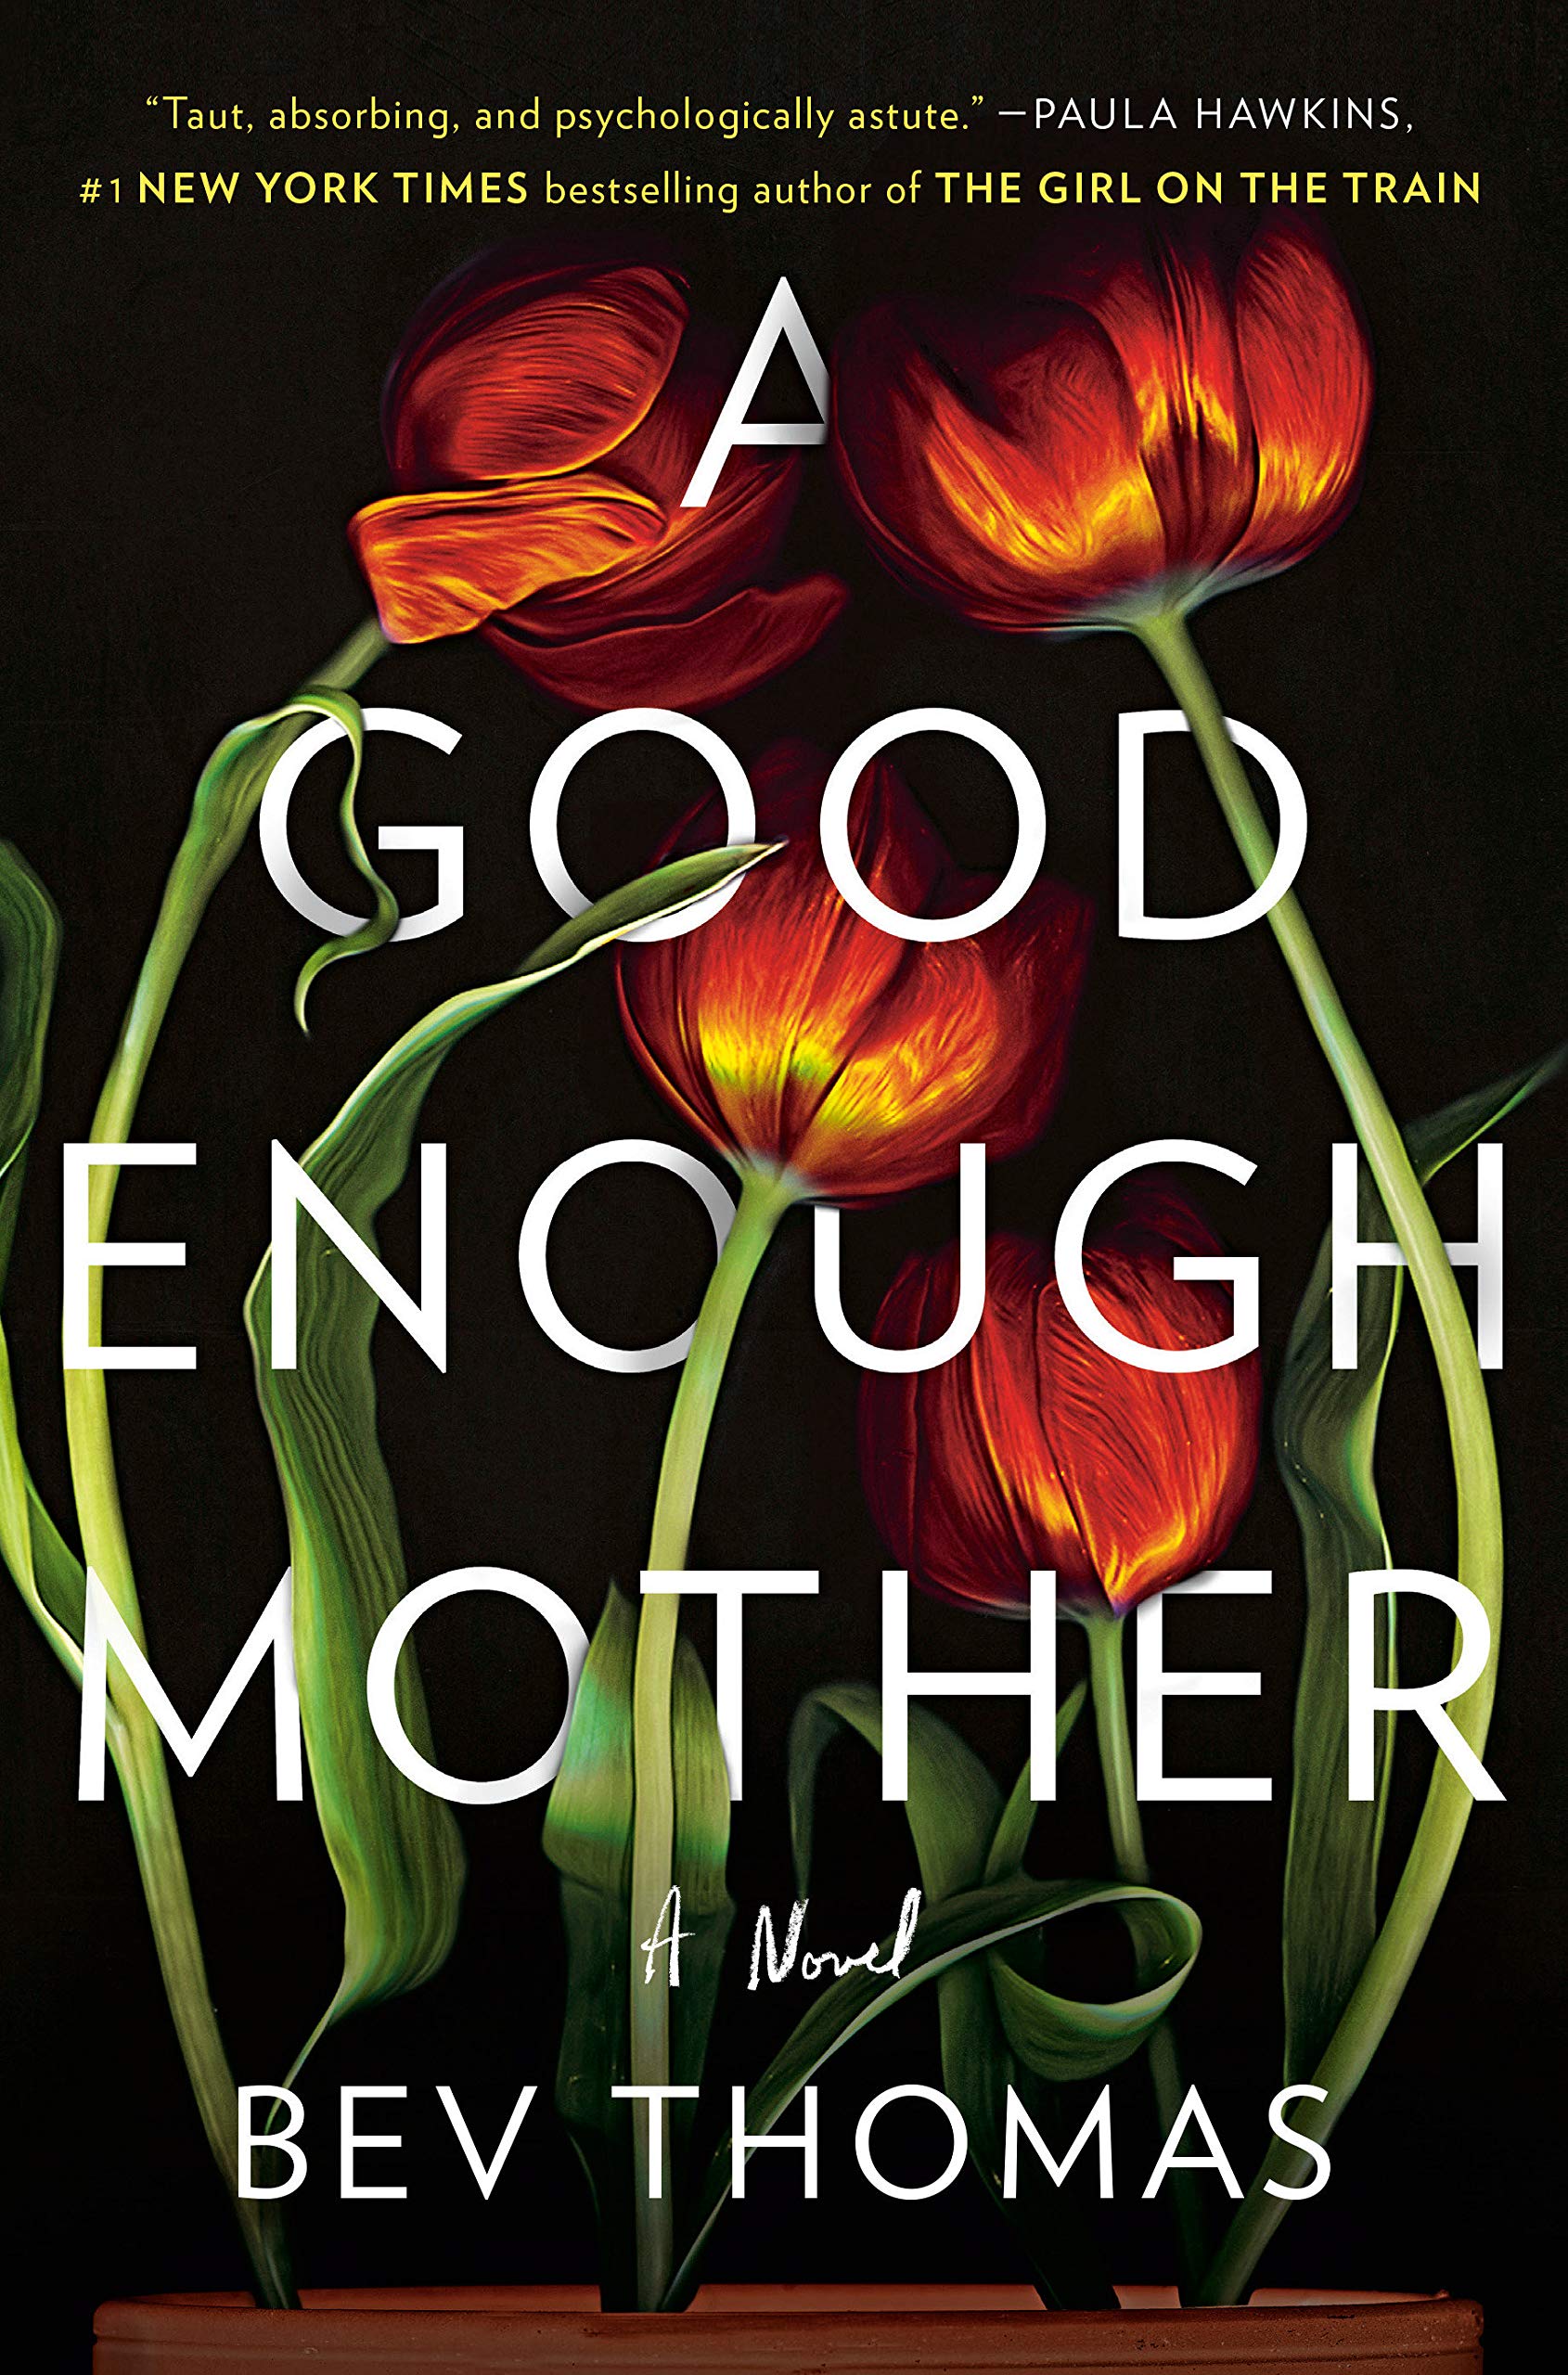 A Good Enough Mother: A Novel